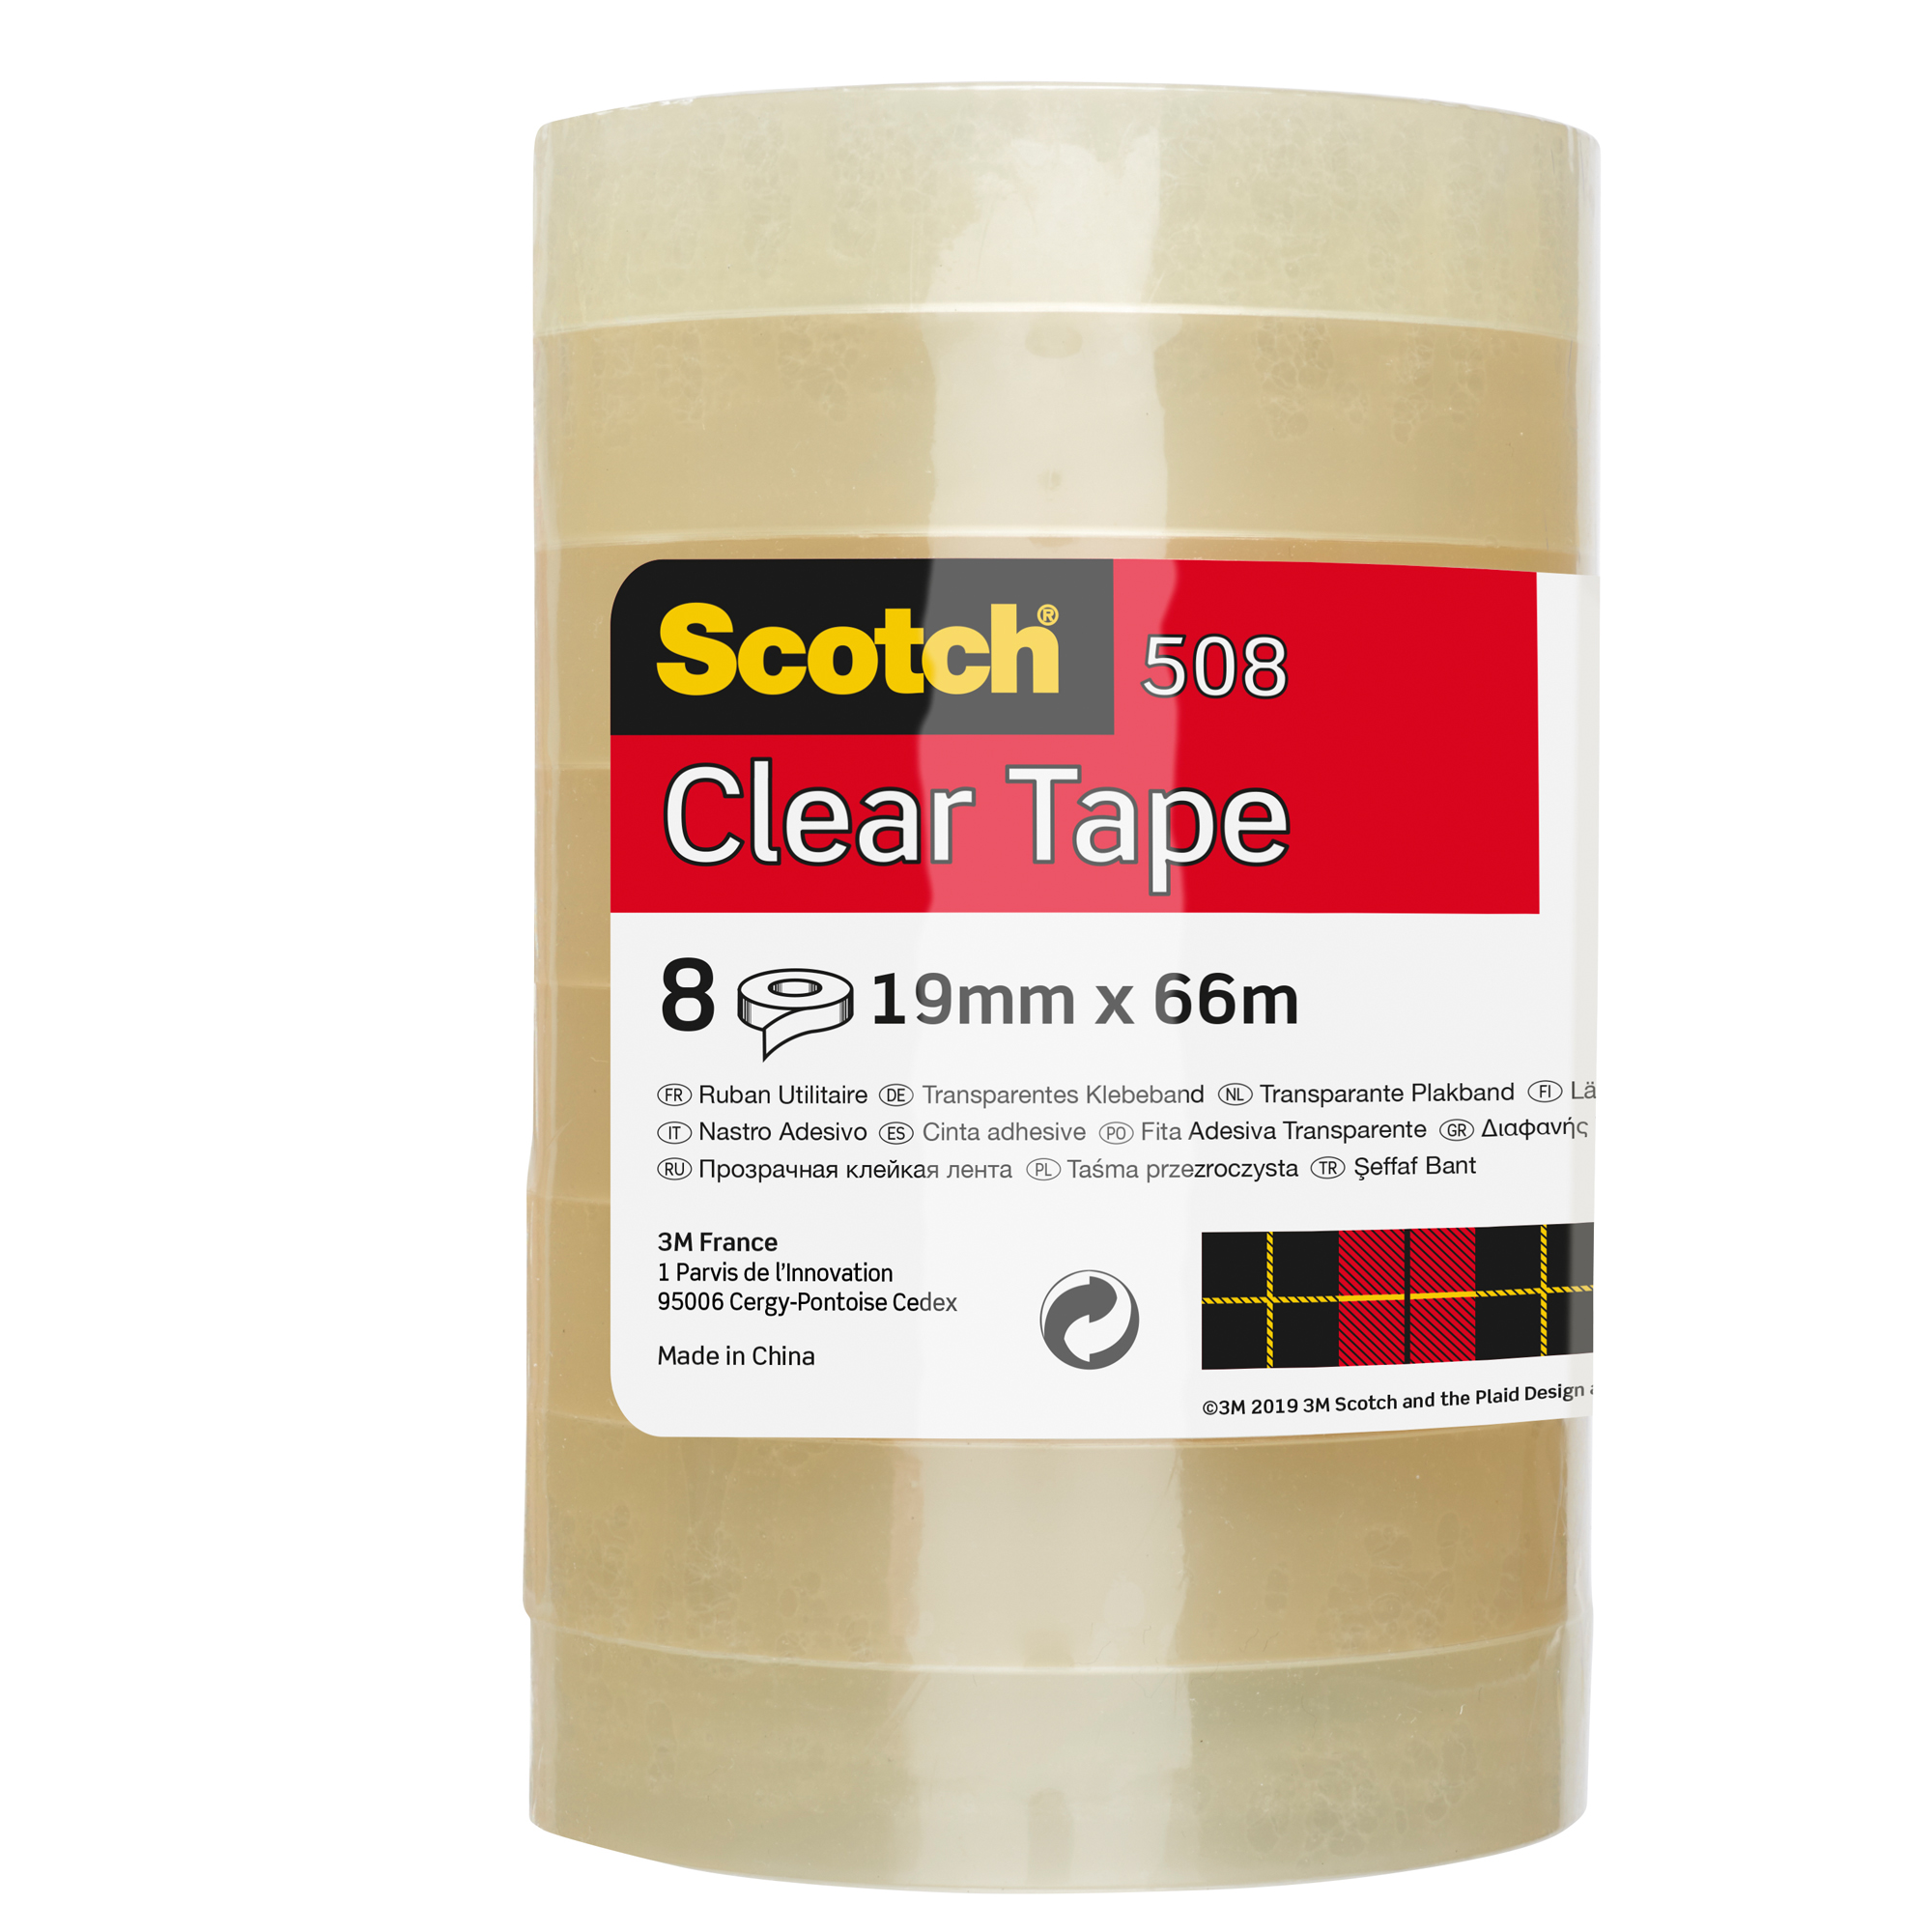 Nastro adesivo Scotch  508 - 19 mm x 66 mt - trasparente - Scotch  - torre 8 rotoli